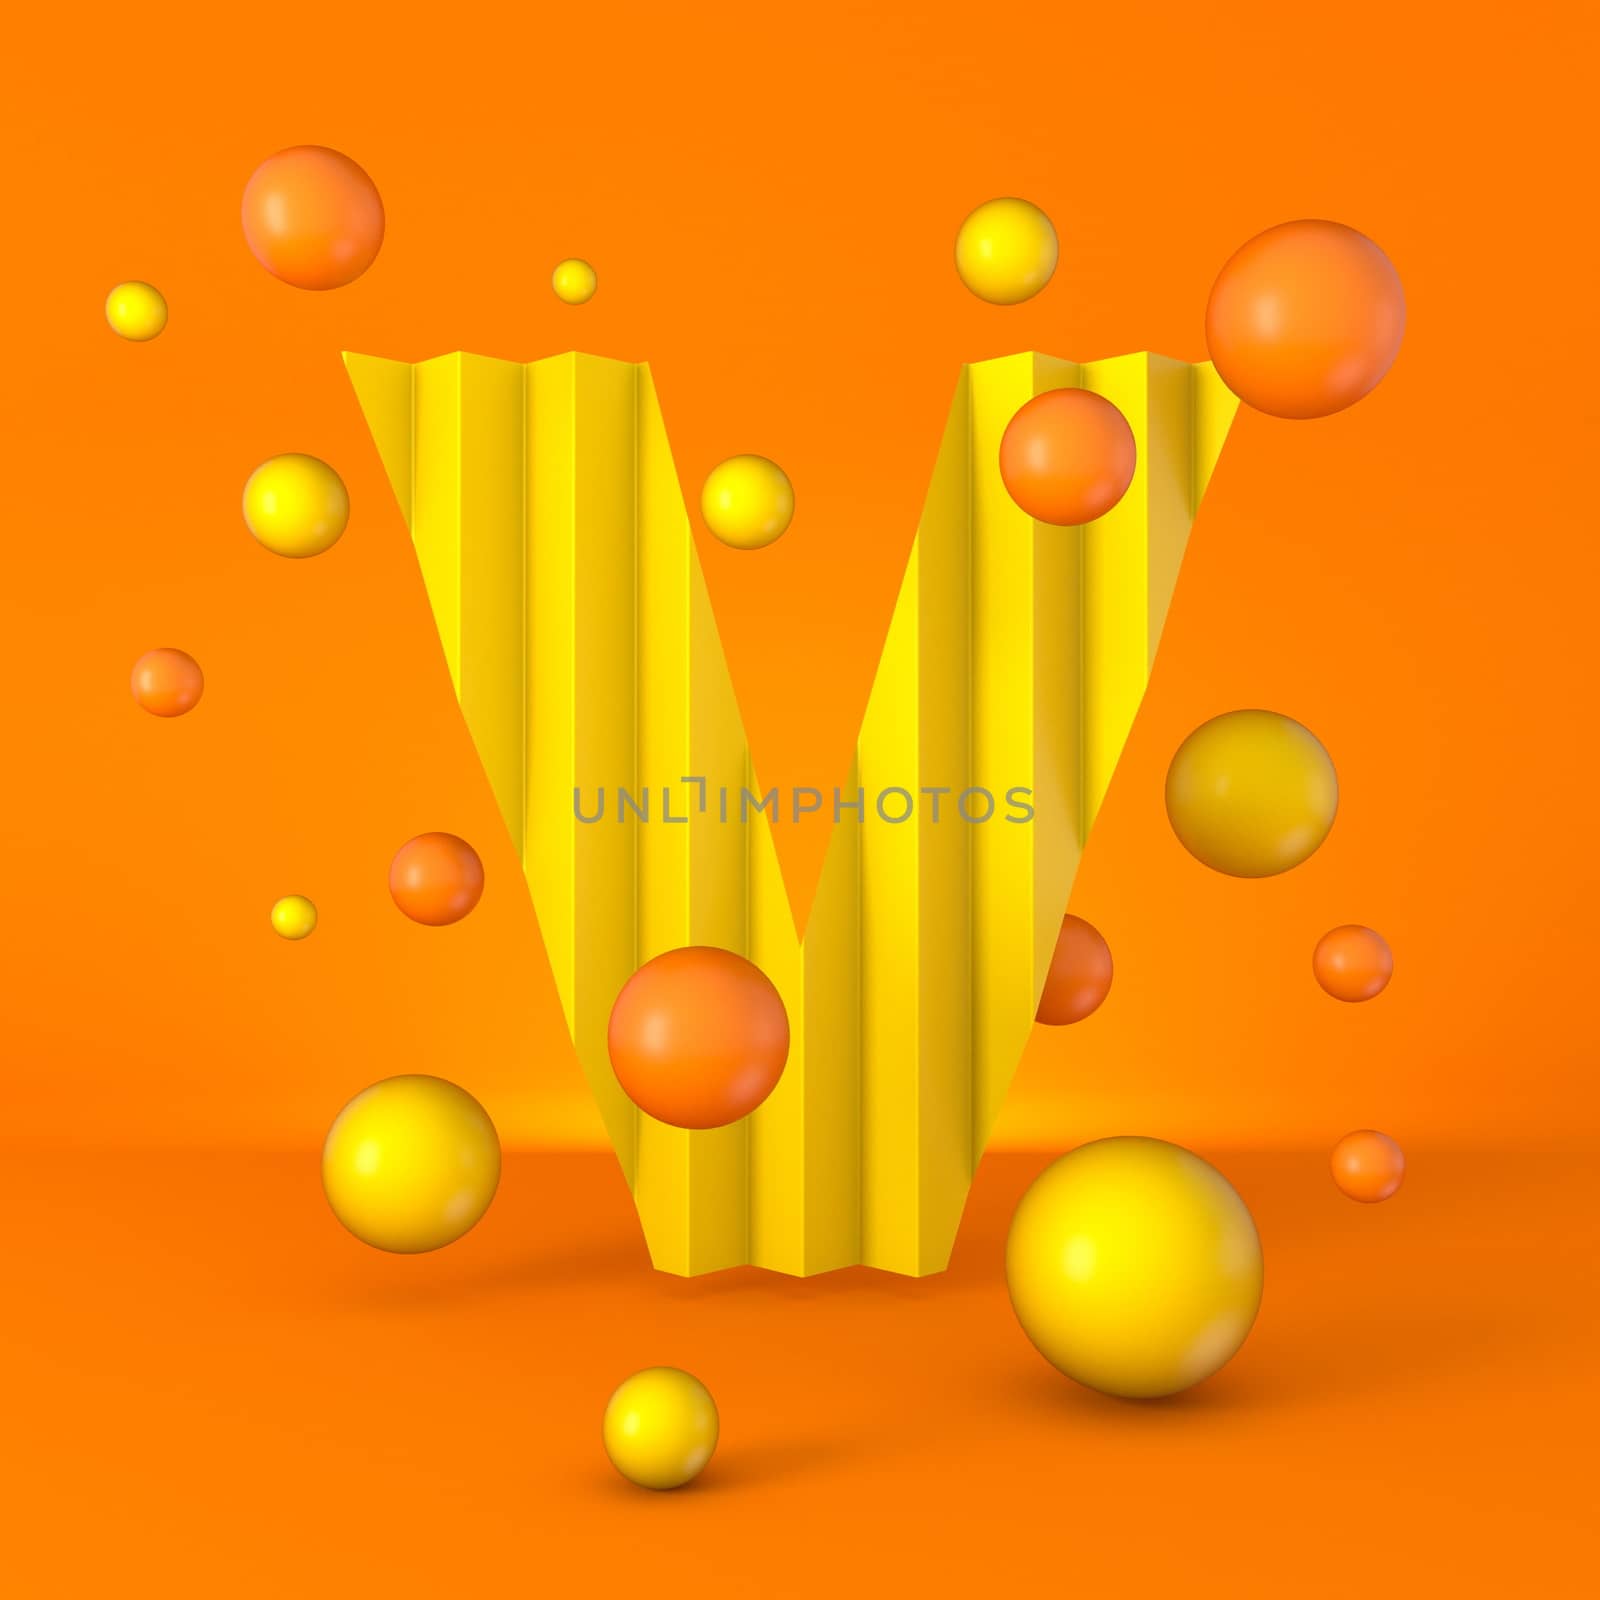 Warm minimal yellow sparkling font Letter V 3D render illustration isolated on orange background